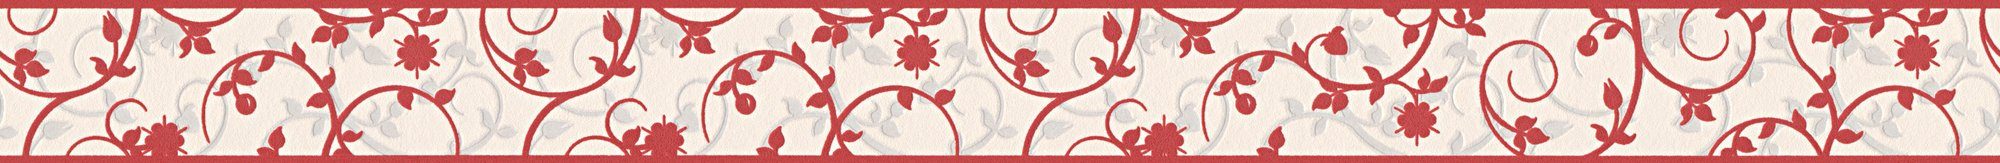 Bordüre Weiß Tapete mehrfarbig, Metall Optik, aufgeschäumt, Only Création Vlies, glatt Borders, Blumen A.S. Rot Bordüre